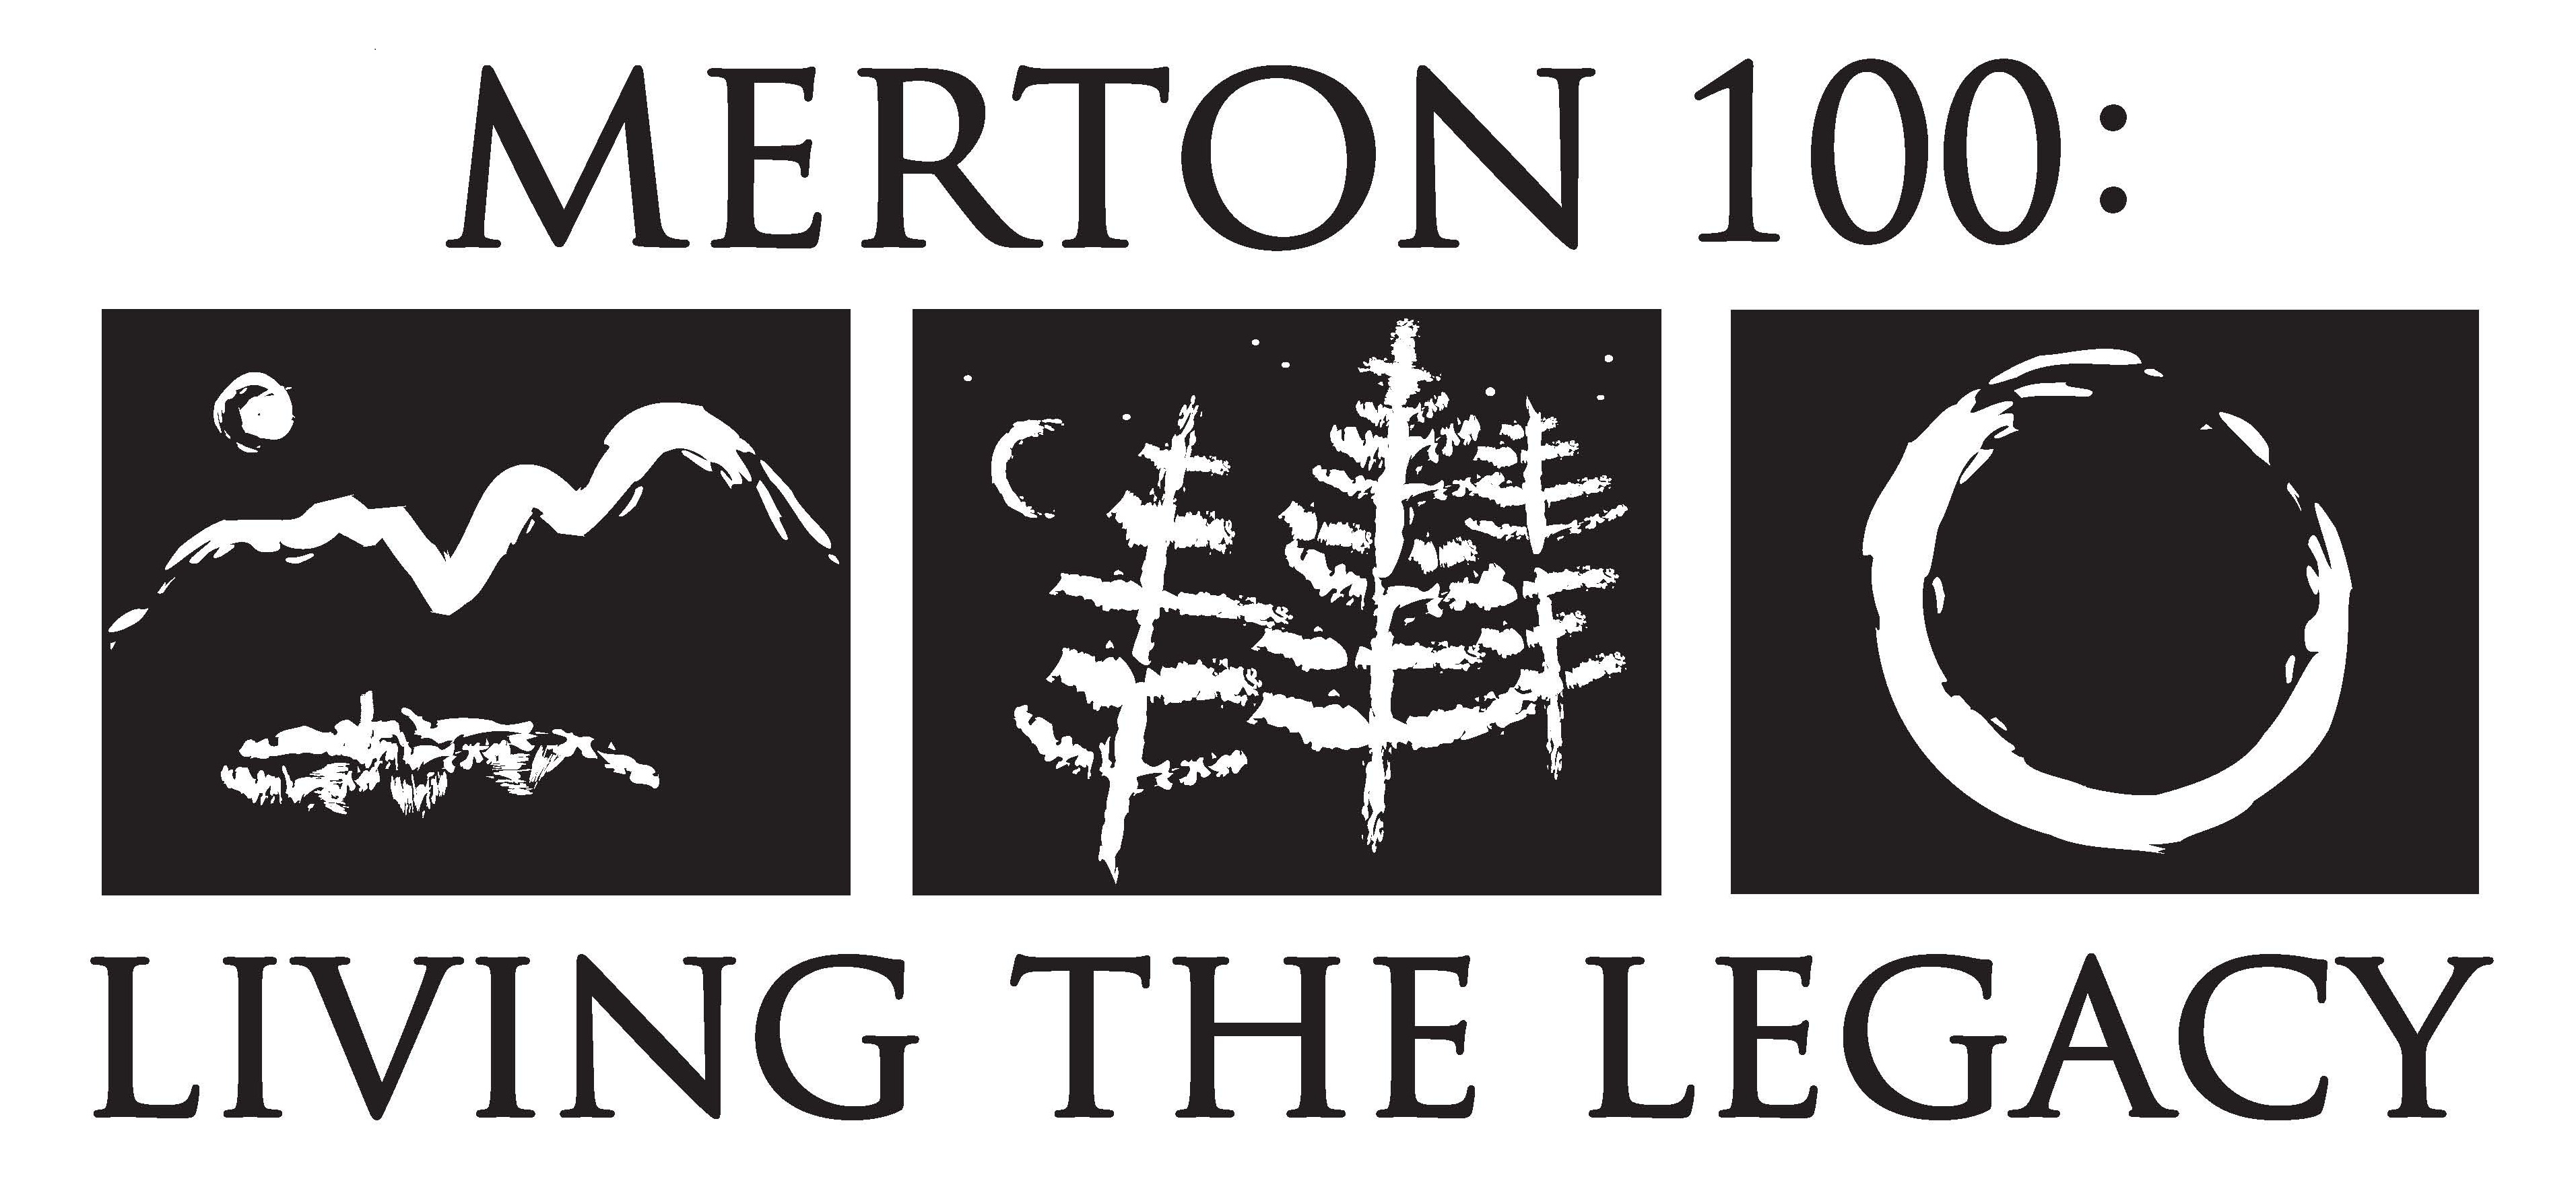 Merton 100: Living the Legacy